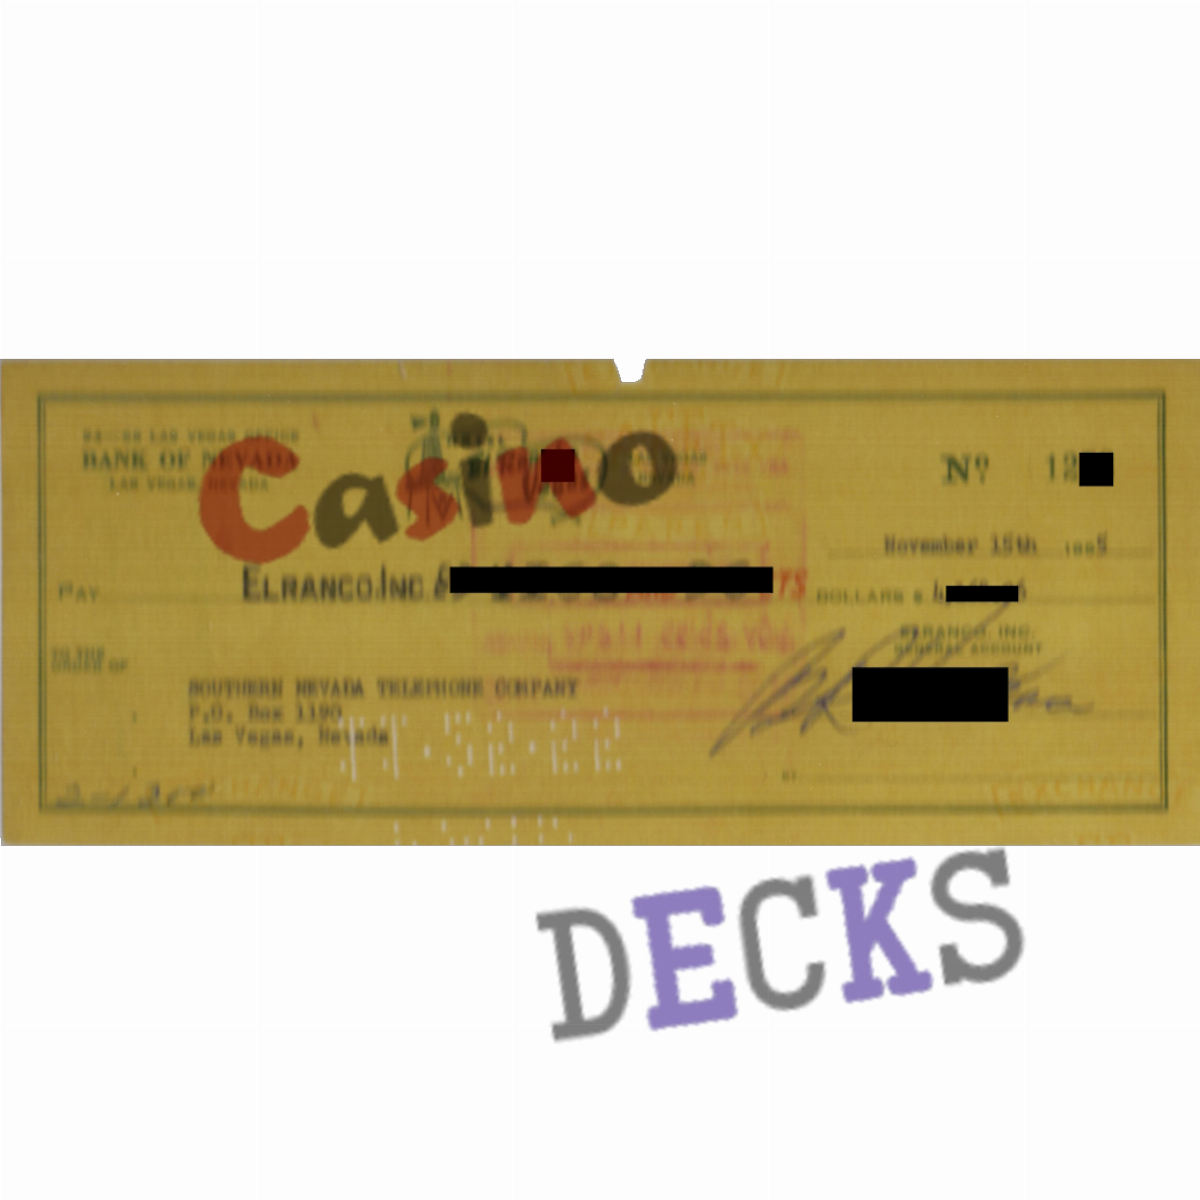 El Rancho Vegas Bank Check #1253